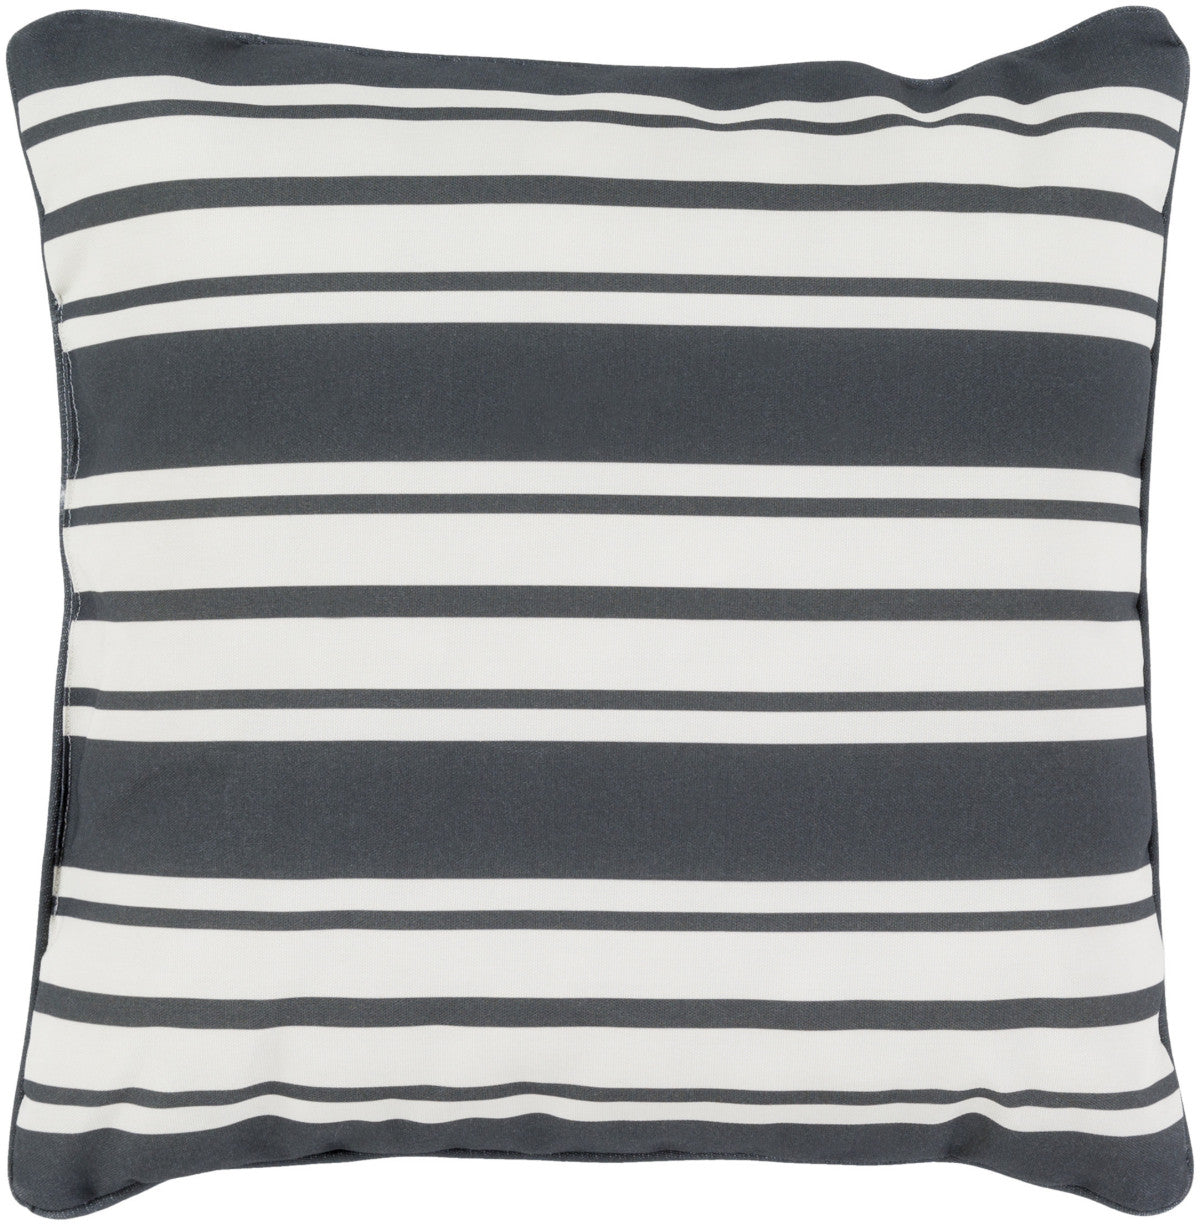 Surya Nautical Stripe NS007 Pillow